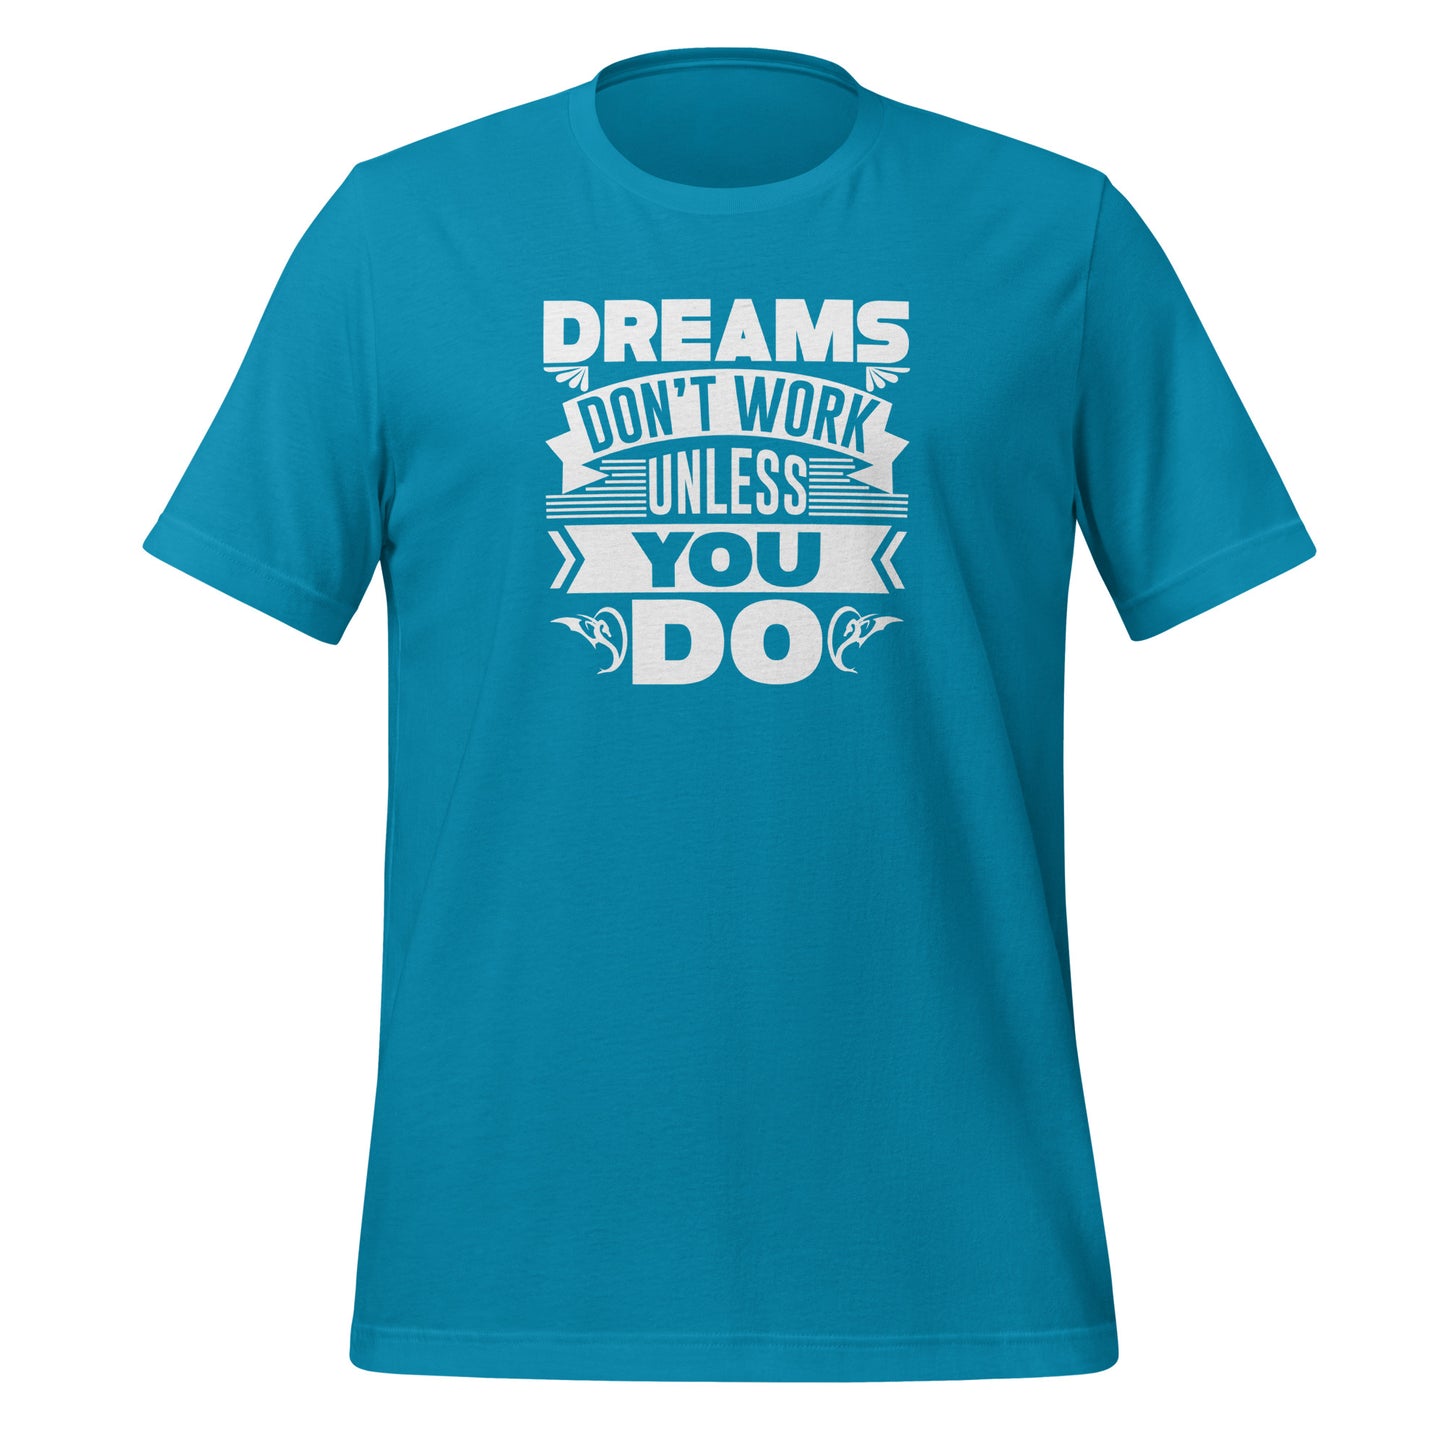 Dreams don't work - Unisex t-shirt